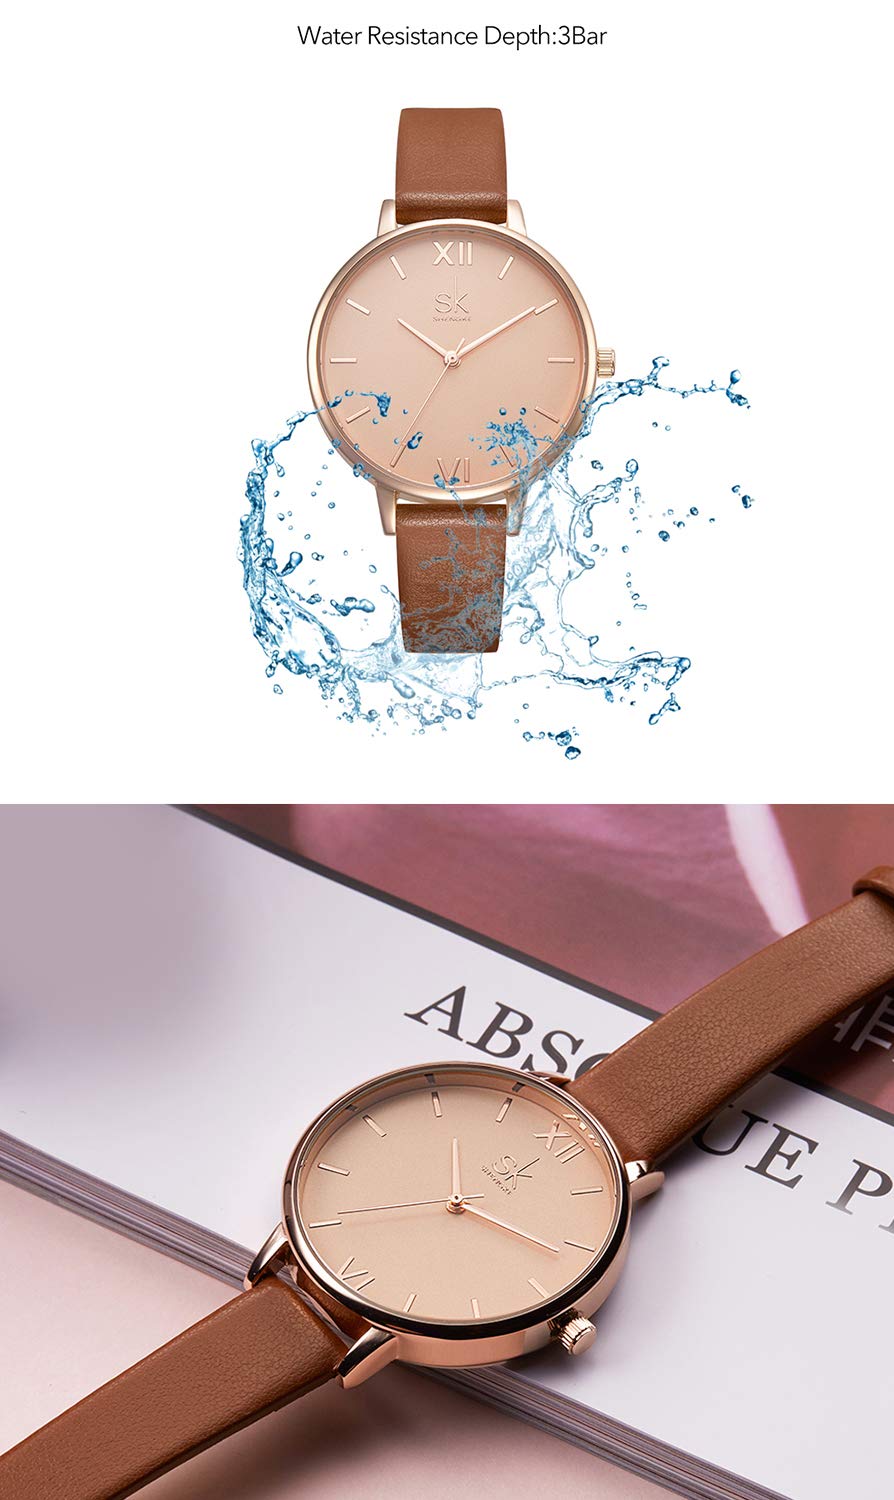 SHENGKE Female Watch Minimalist Ultra-Thin Watch 2023 Fashion Design Lady Girl Wrist Watch